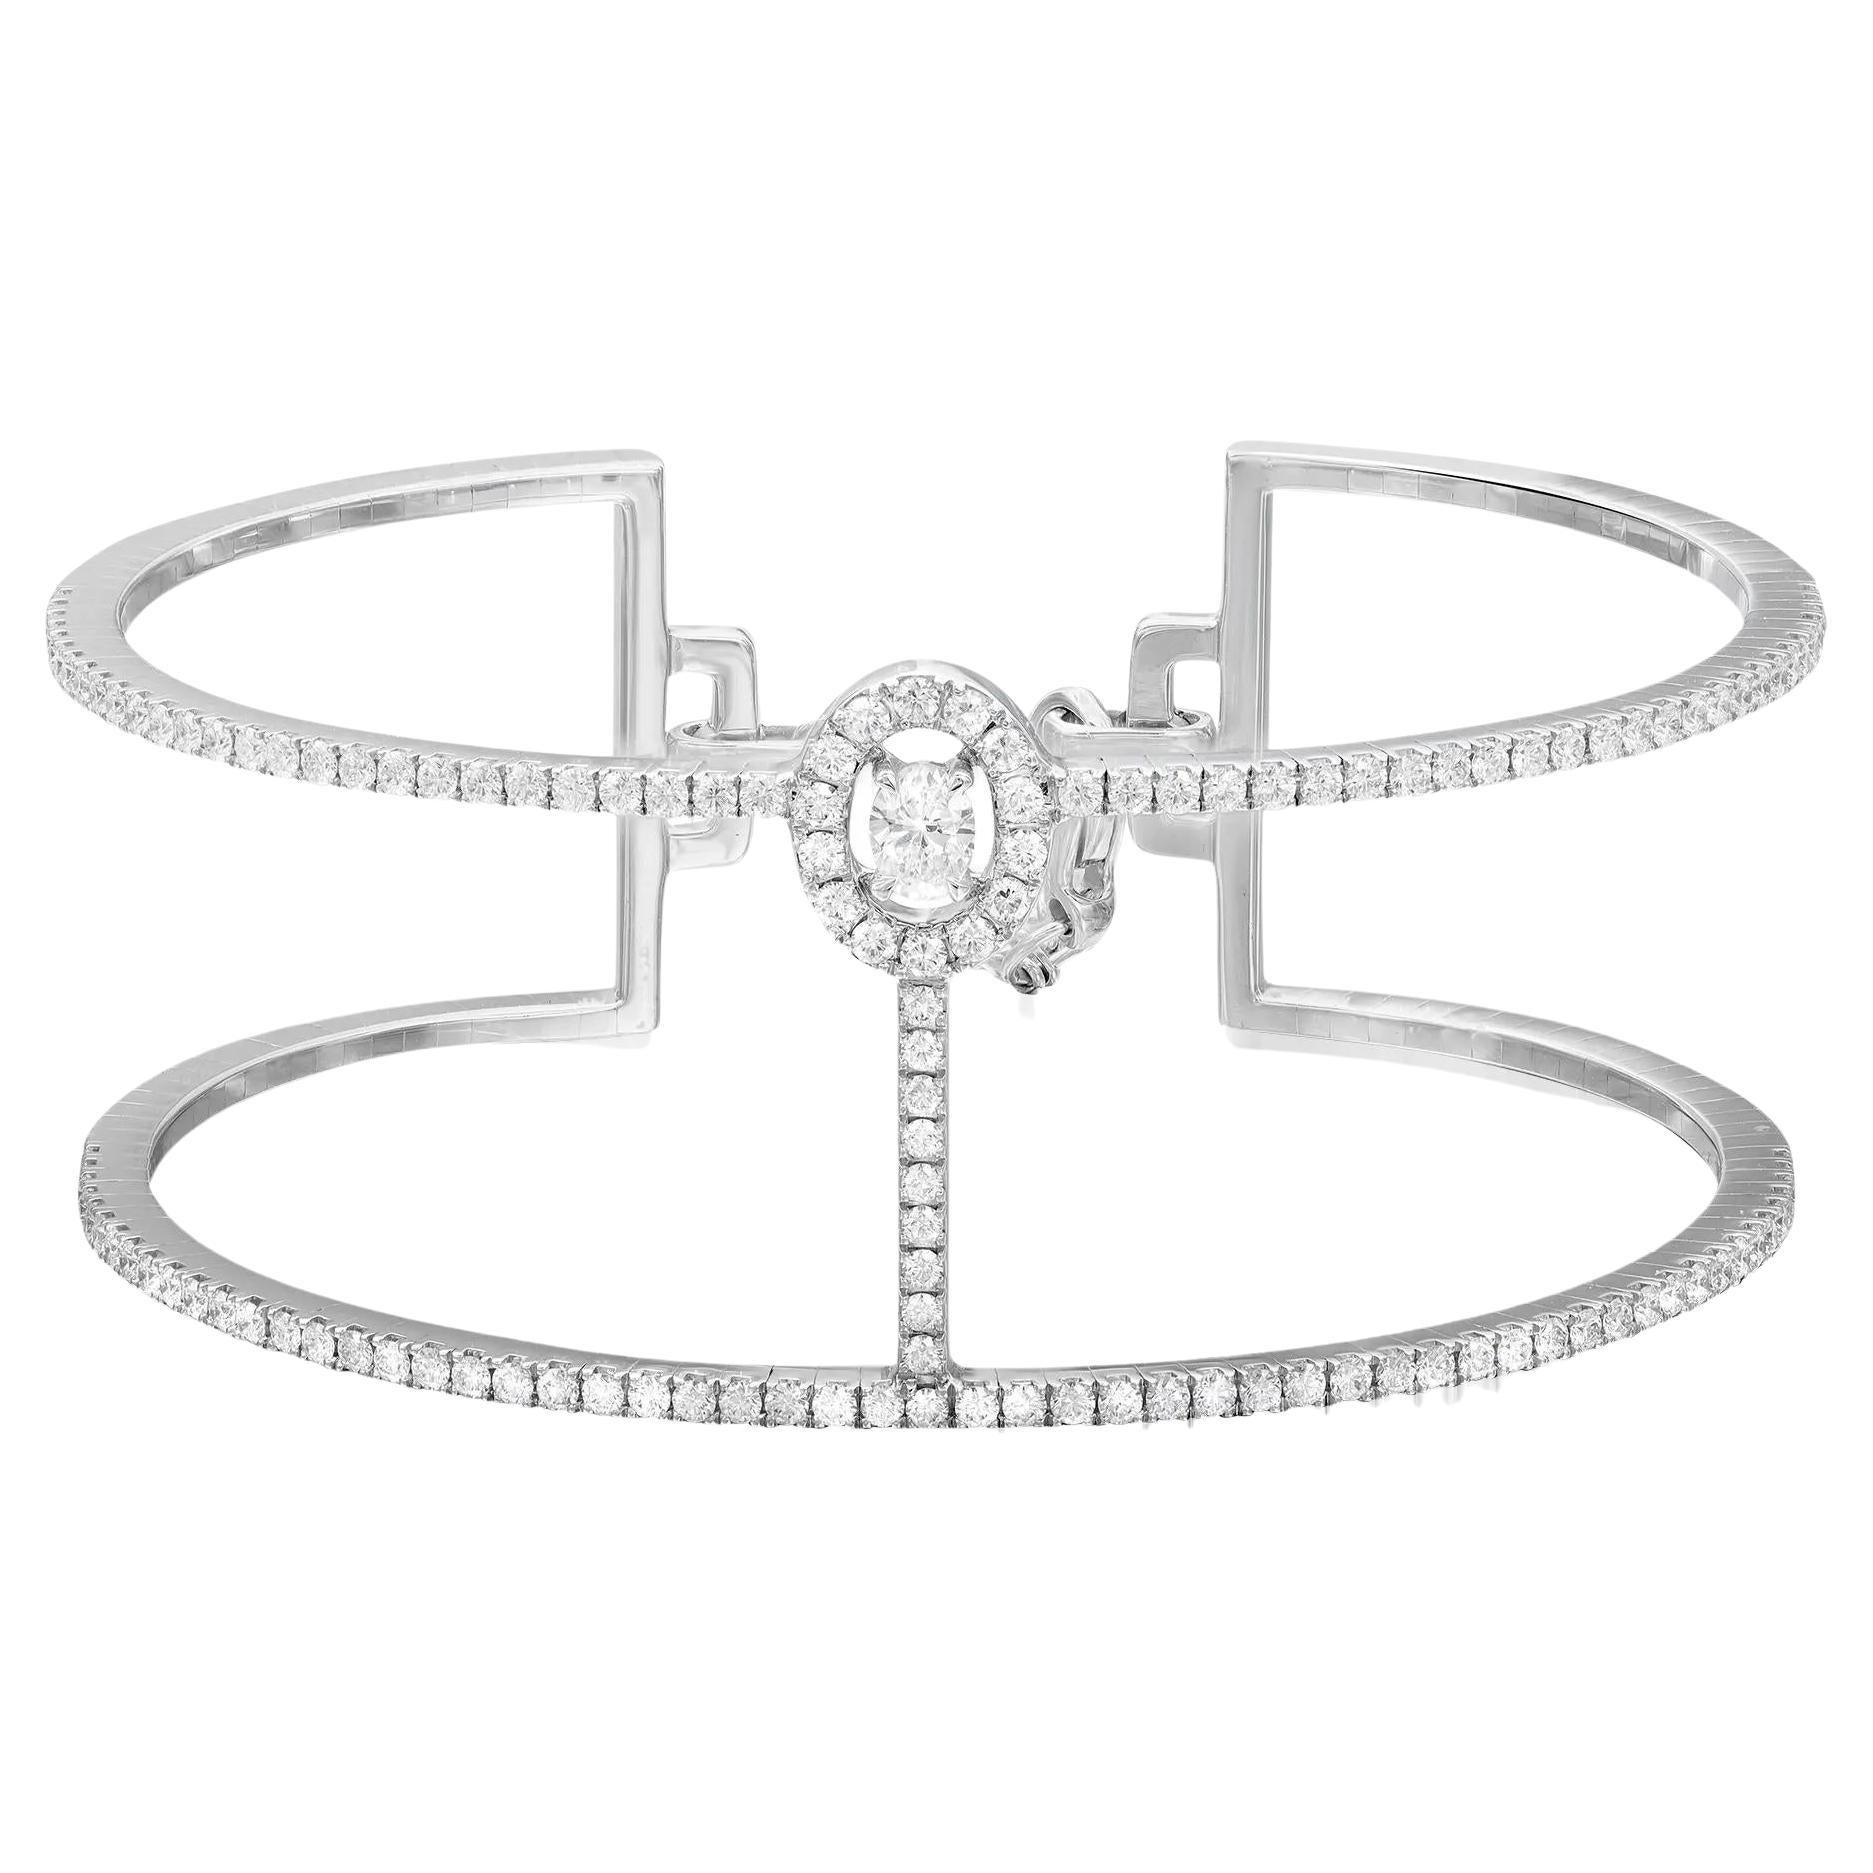 Messika Manch Glam'Azone Diamond 2 Row Bracelet 18K White Gold 1.53Cttw SZ Small For Sale